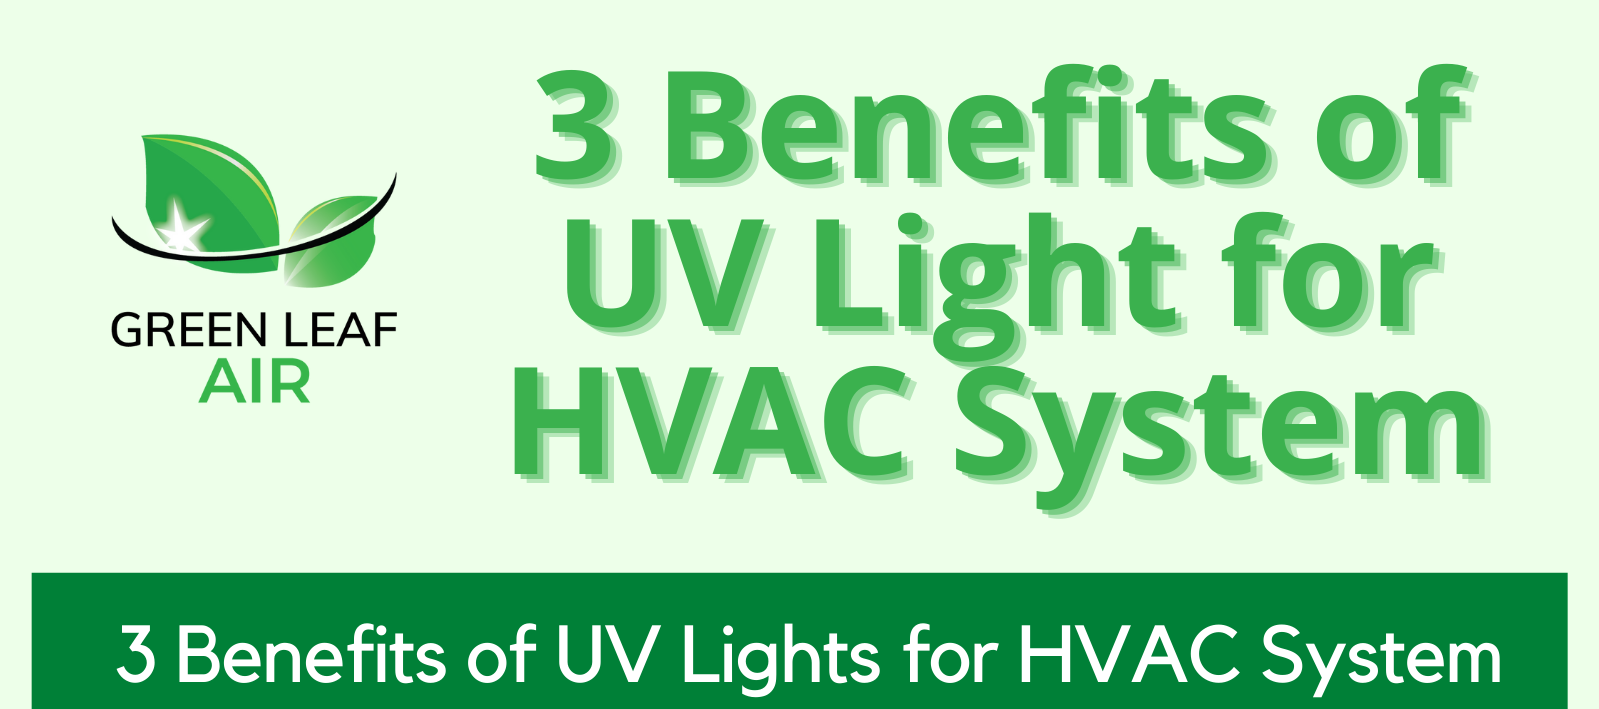 3 Benefits of UV Light for HVAC System